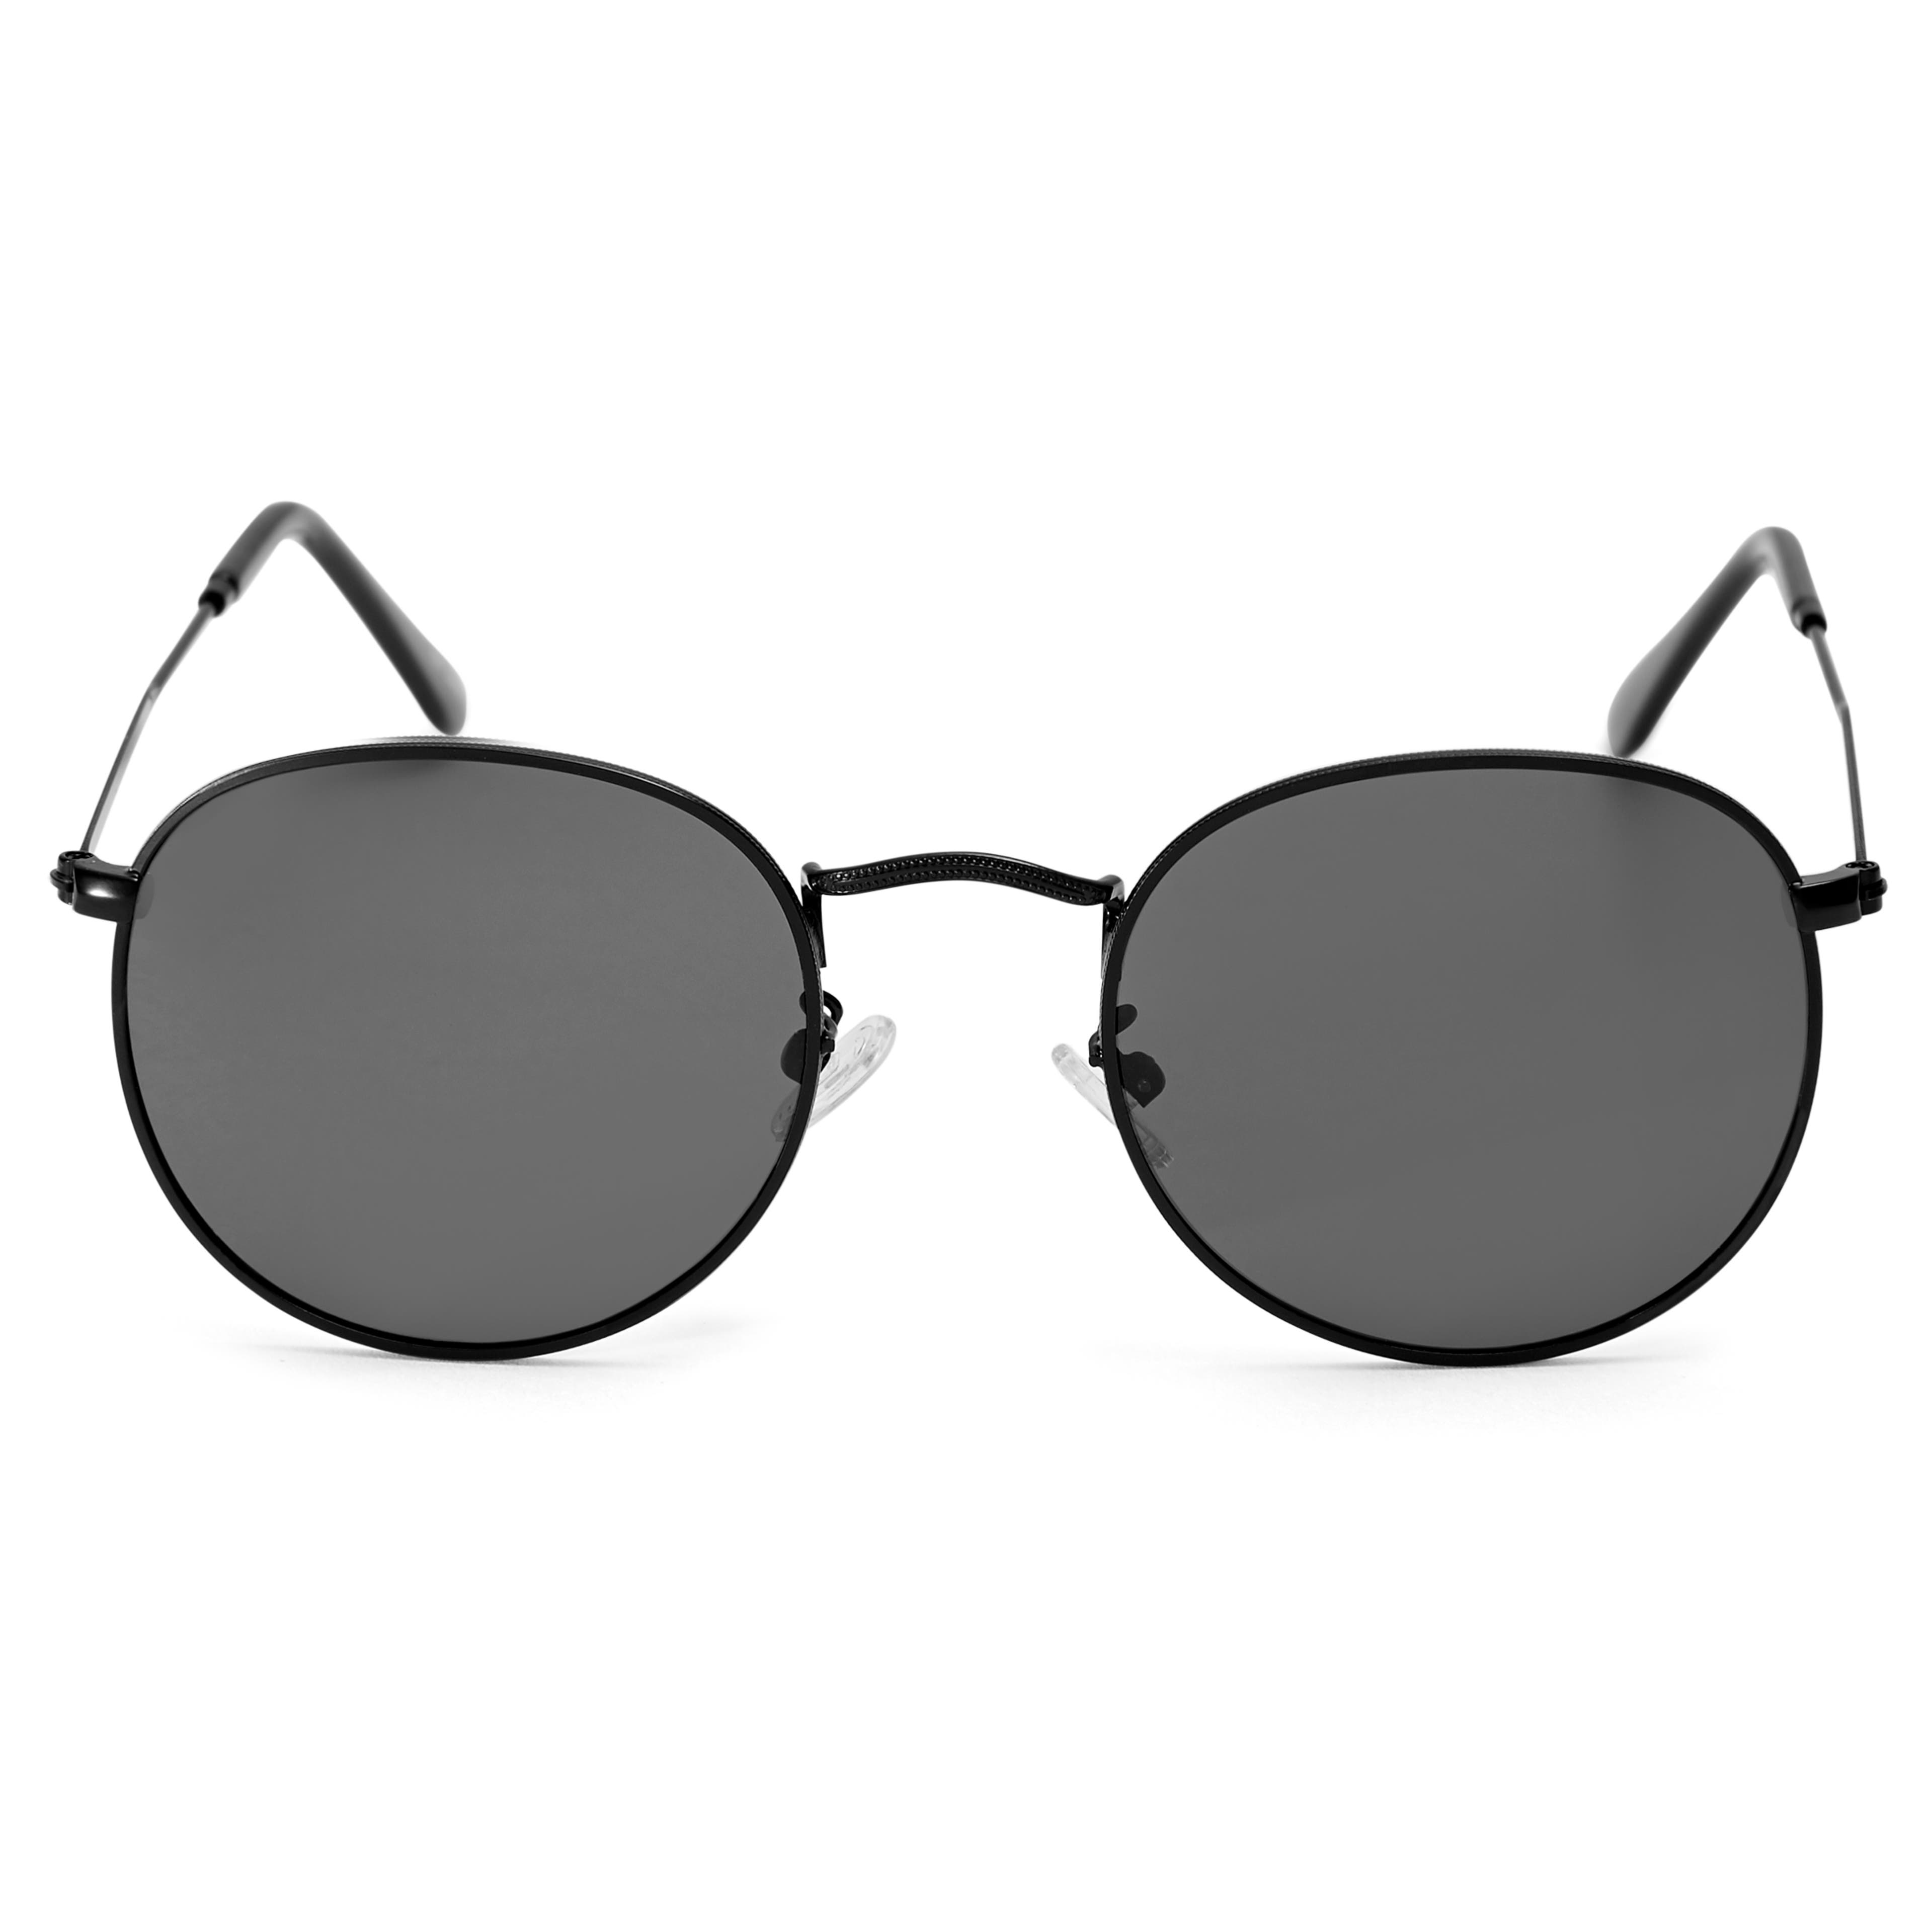 Dandy All Black Polarized Sunglasses